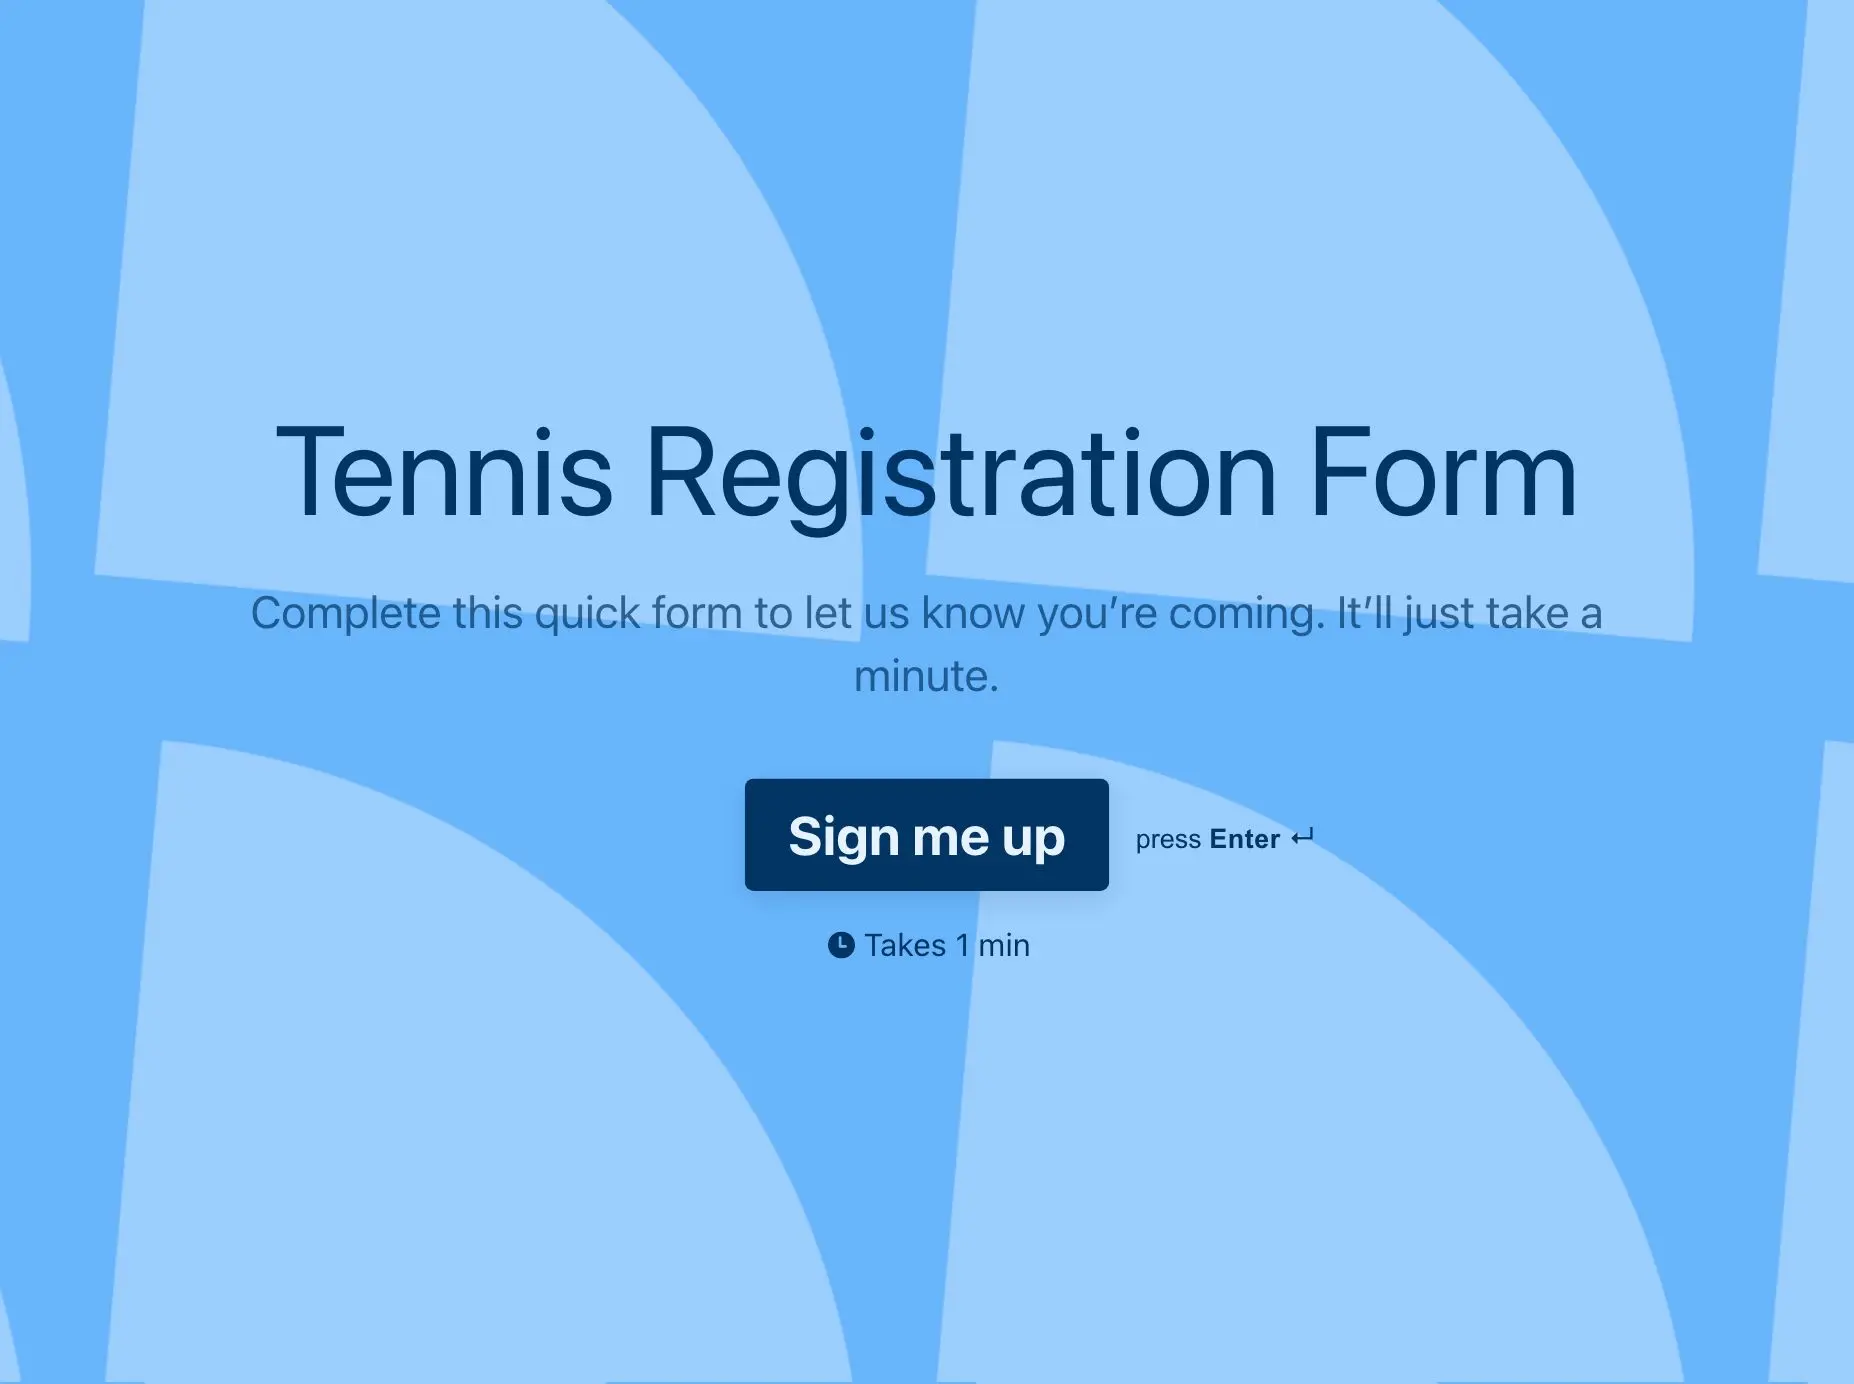 Tennis Registration Form Template Hero